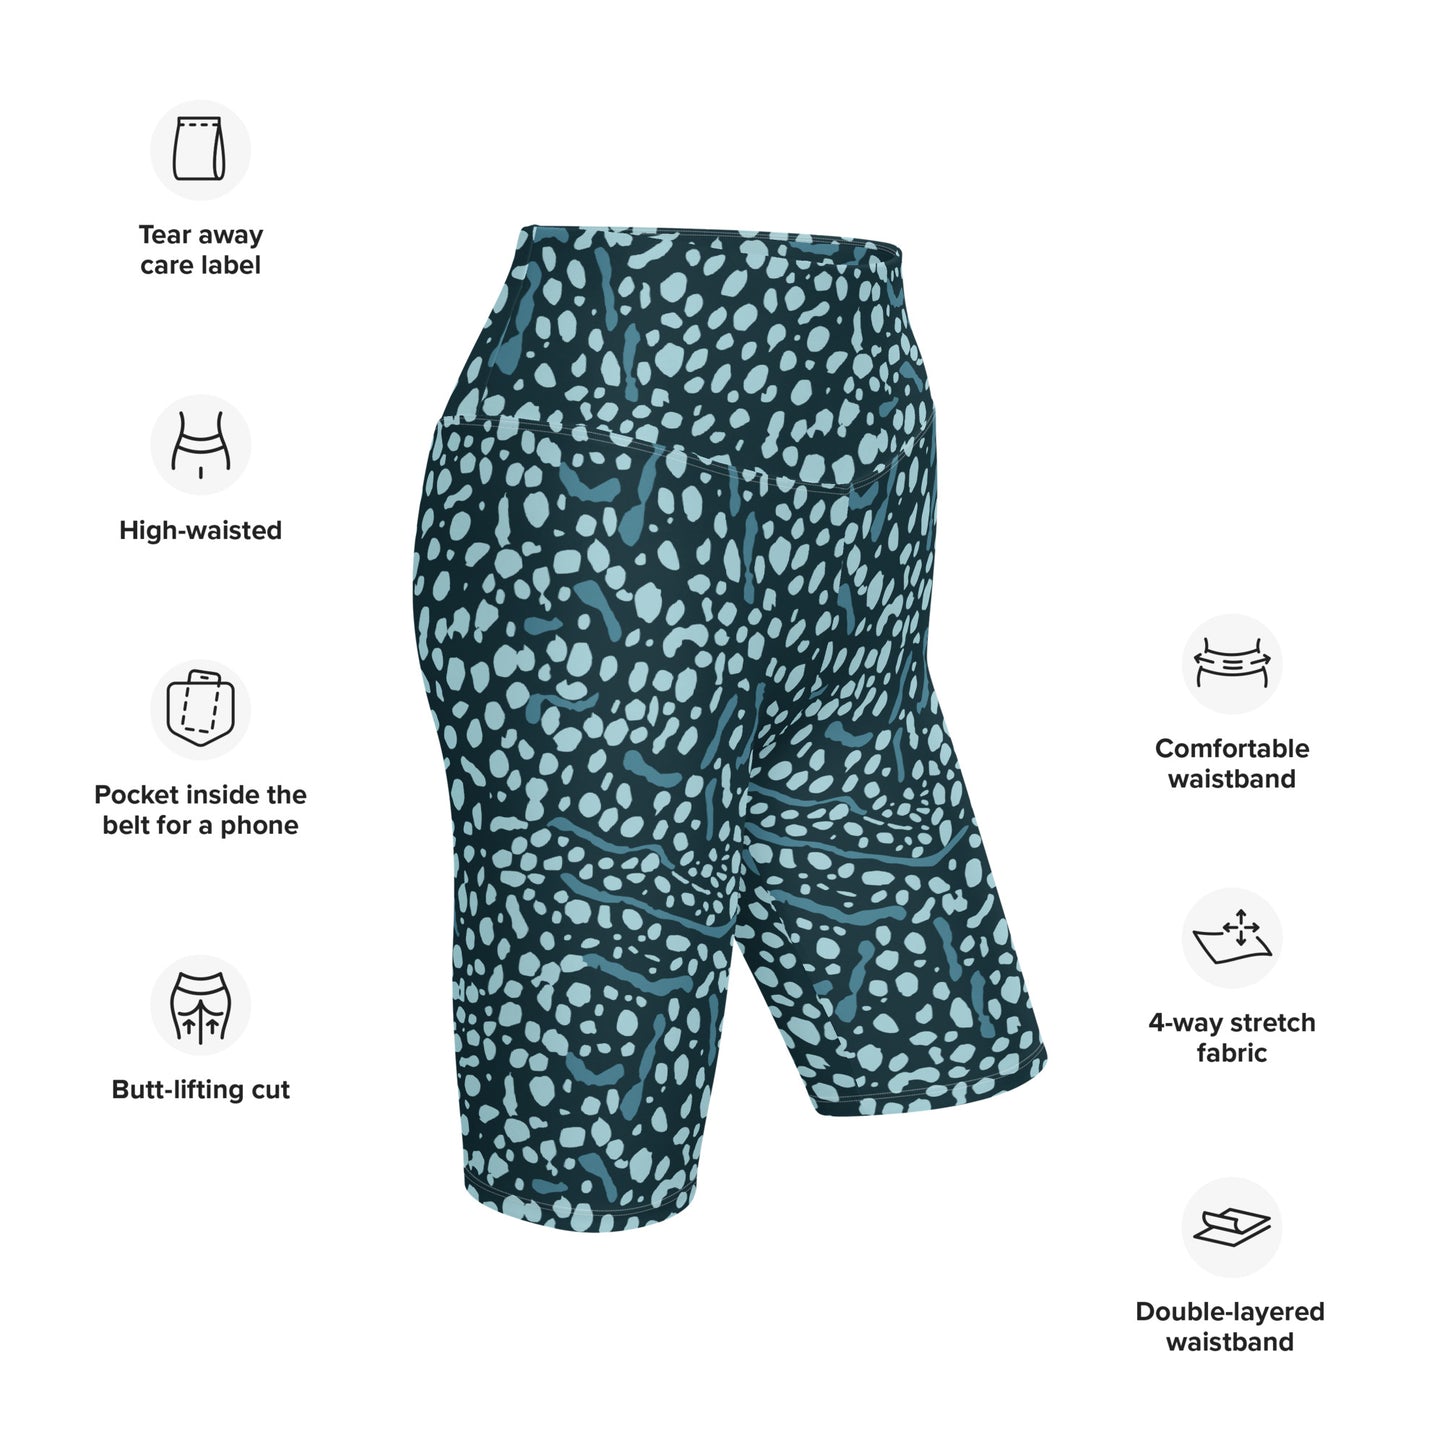 Whale Shark Biker Shorts - Divewear Collection